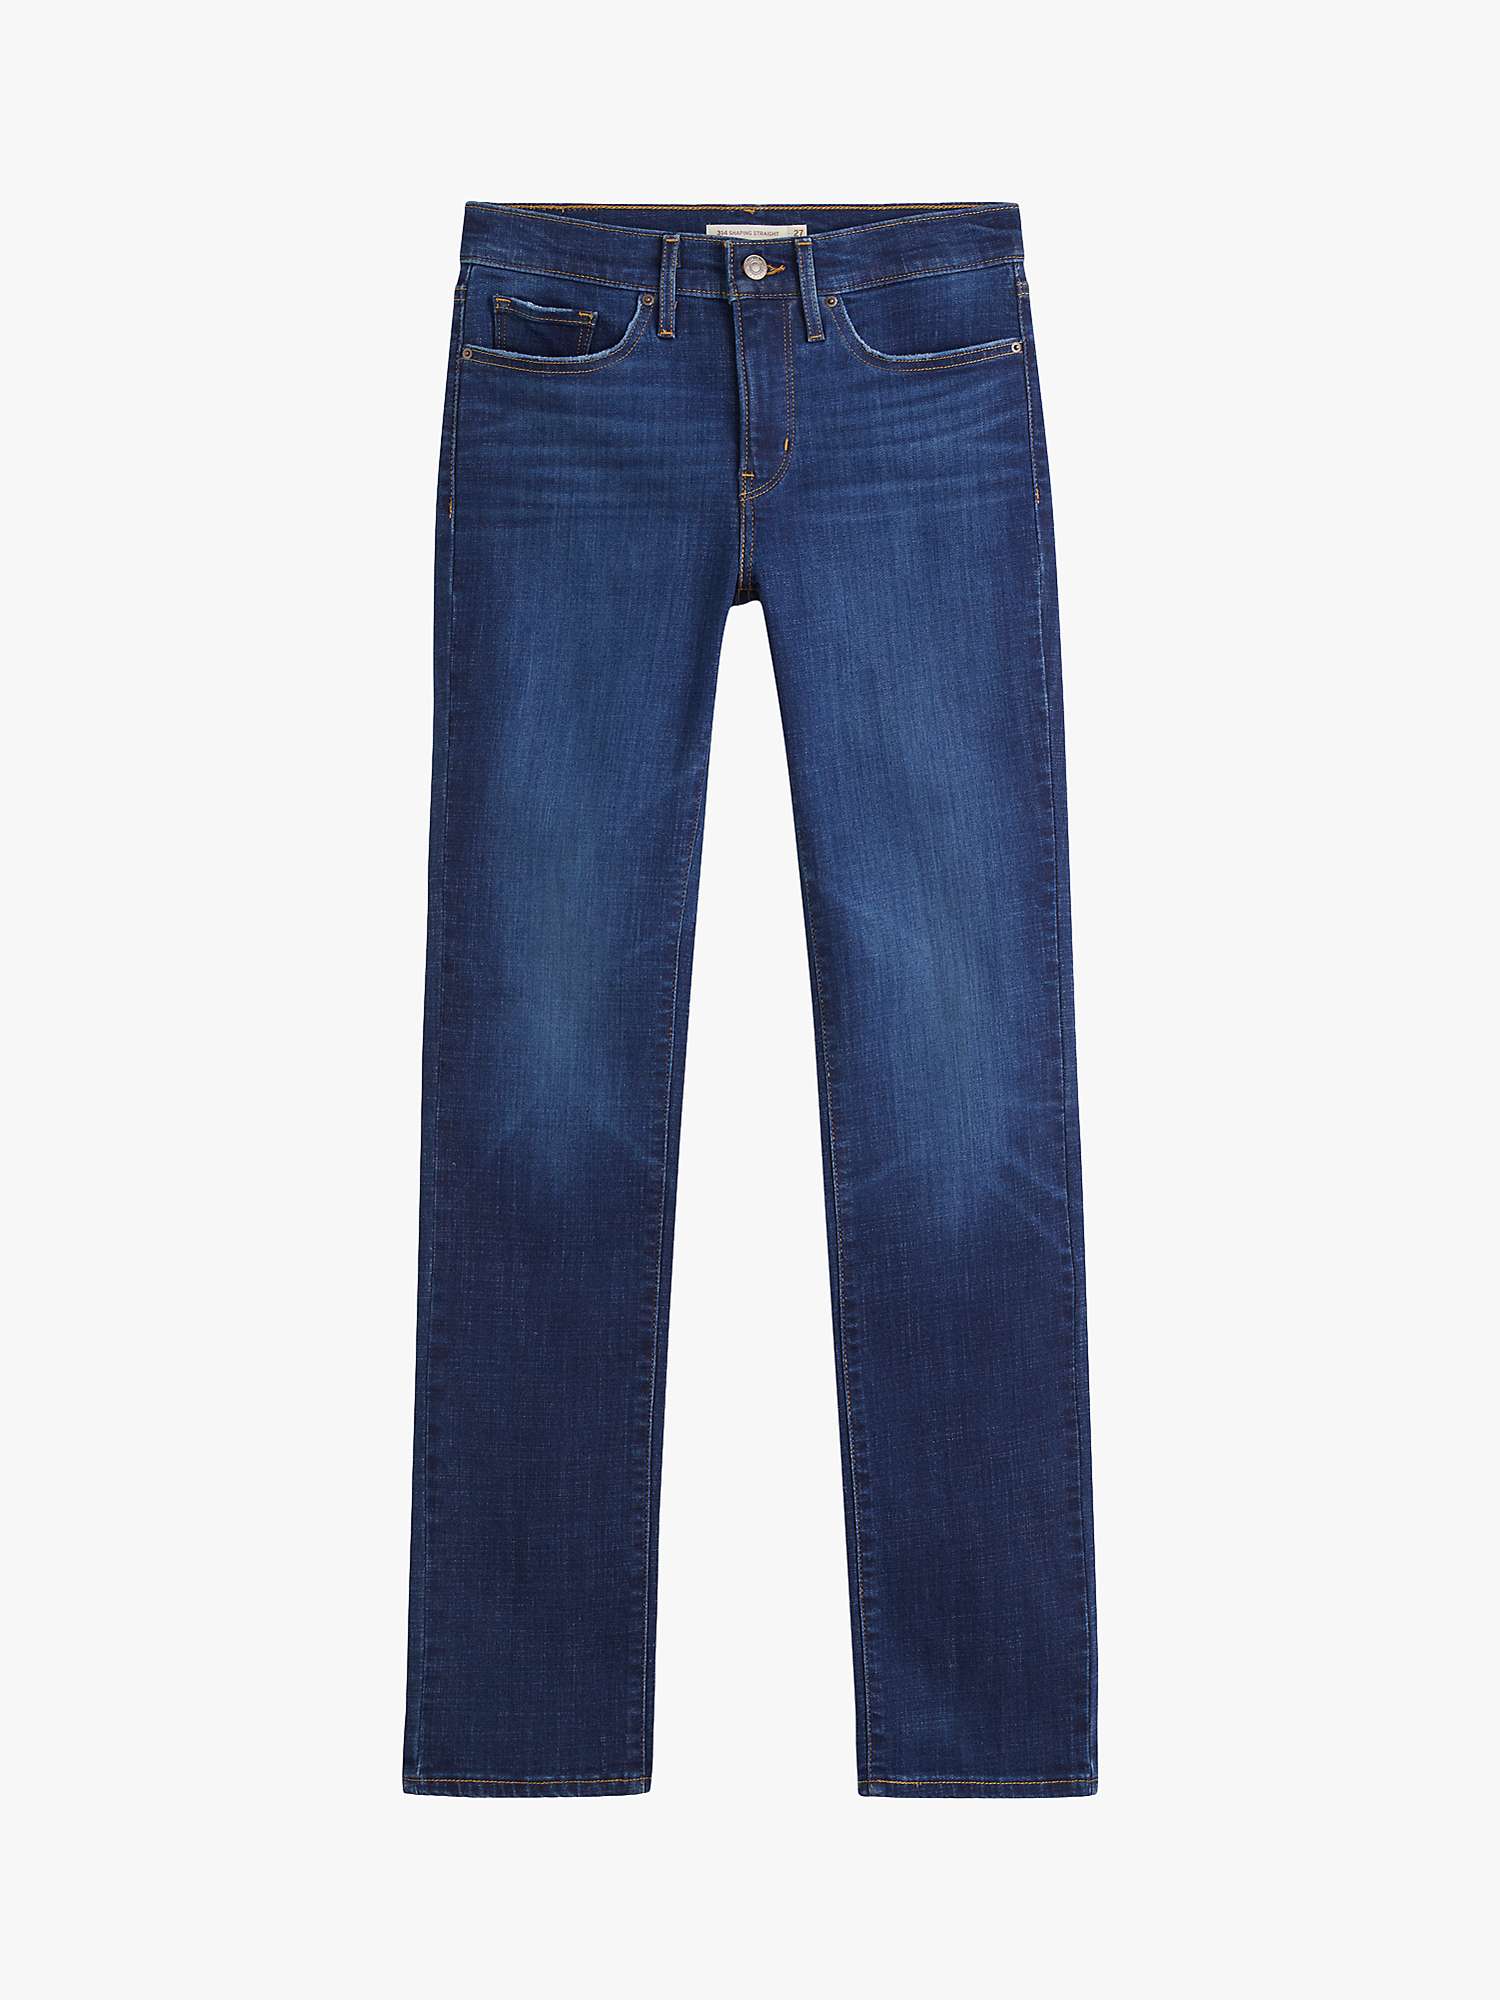 Buy Levi's 314 Shaping Straight Cut Jeans, Cobalt Honour Online at johnlewis.com